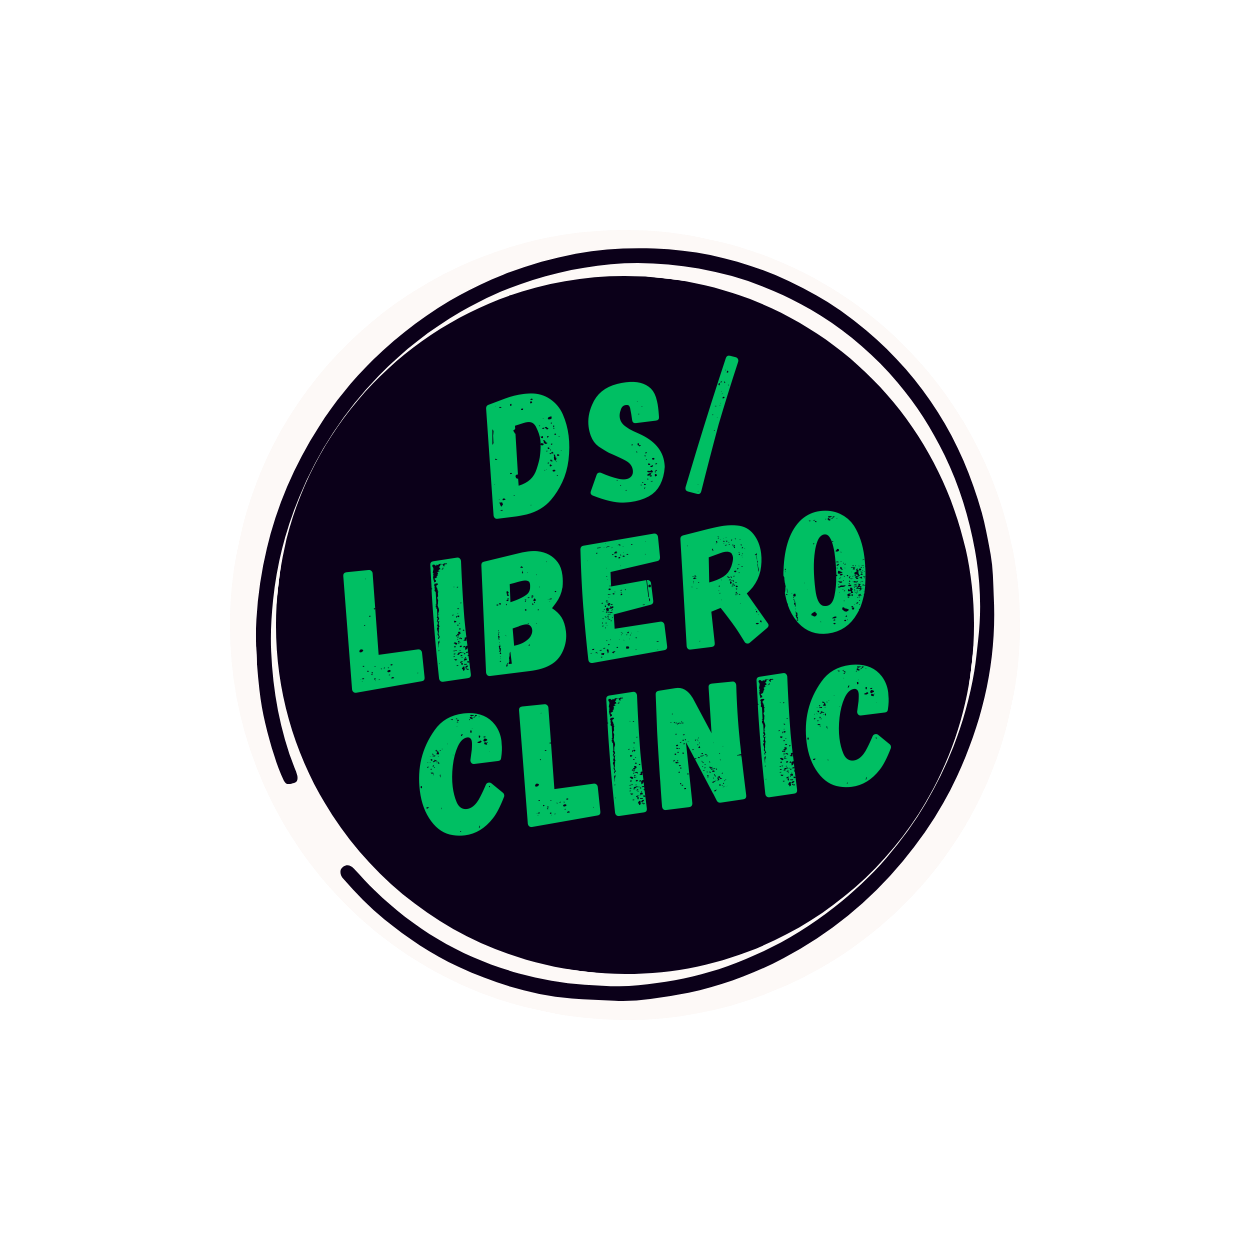 DS:Libero clinic image